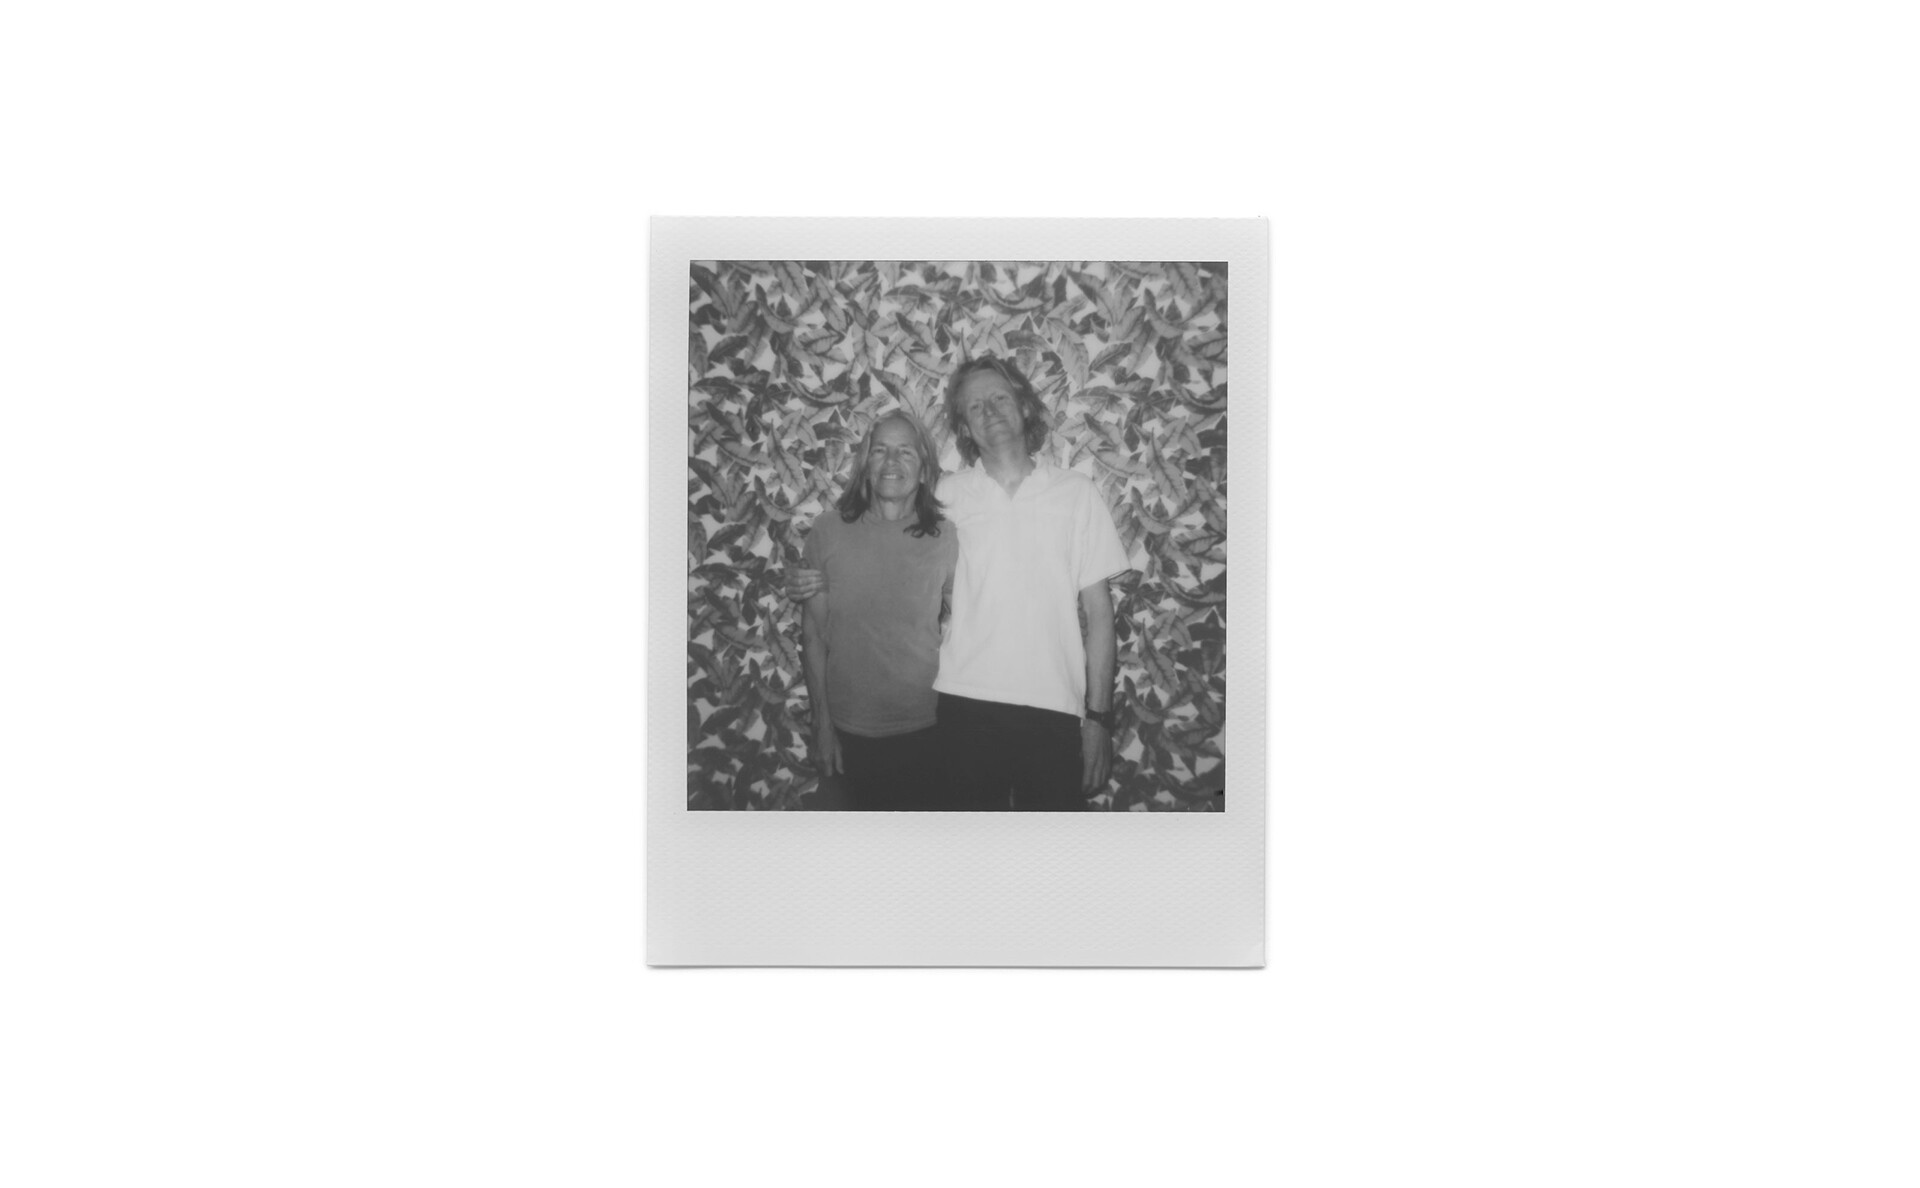 A polaroid photo of Eileen Myles and Flavin Judd in 2019.